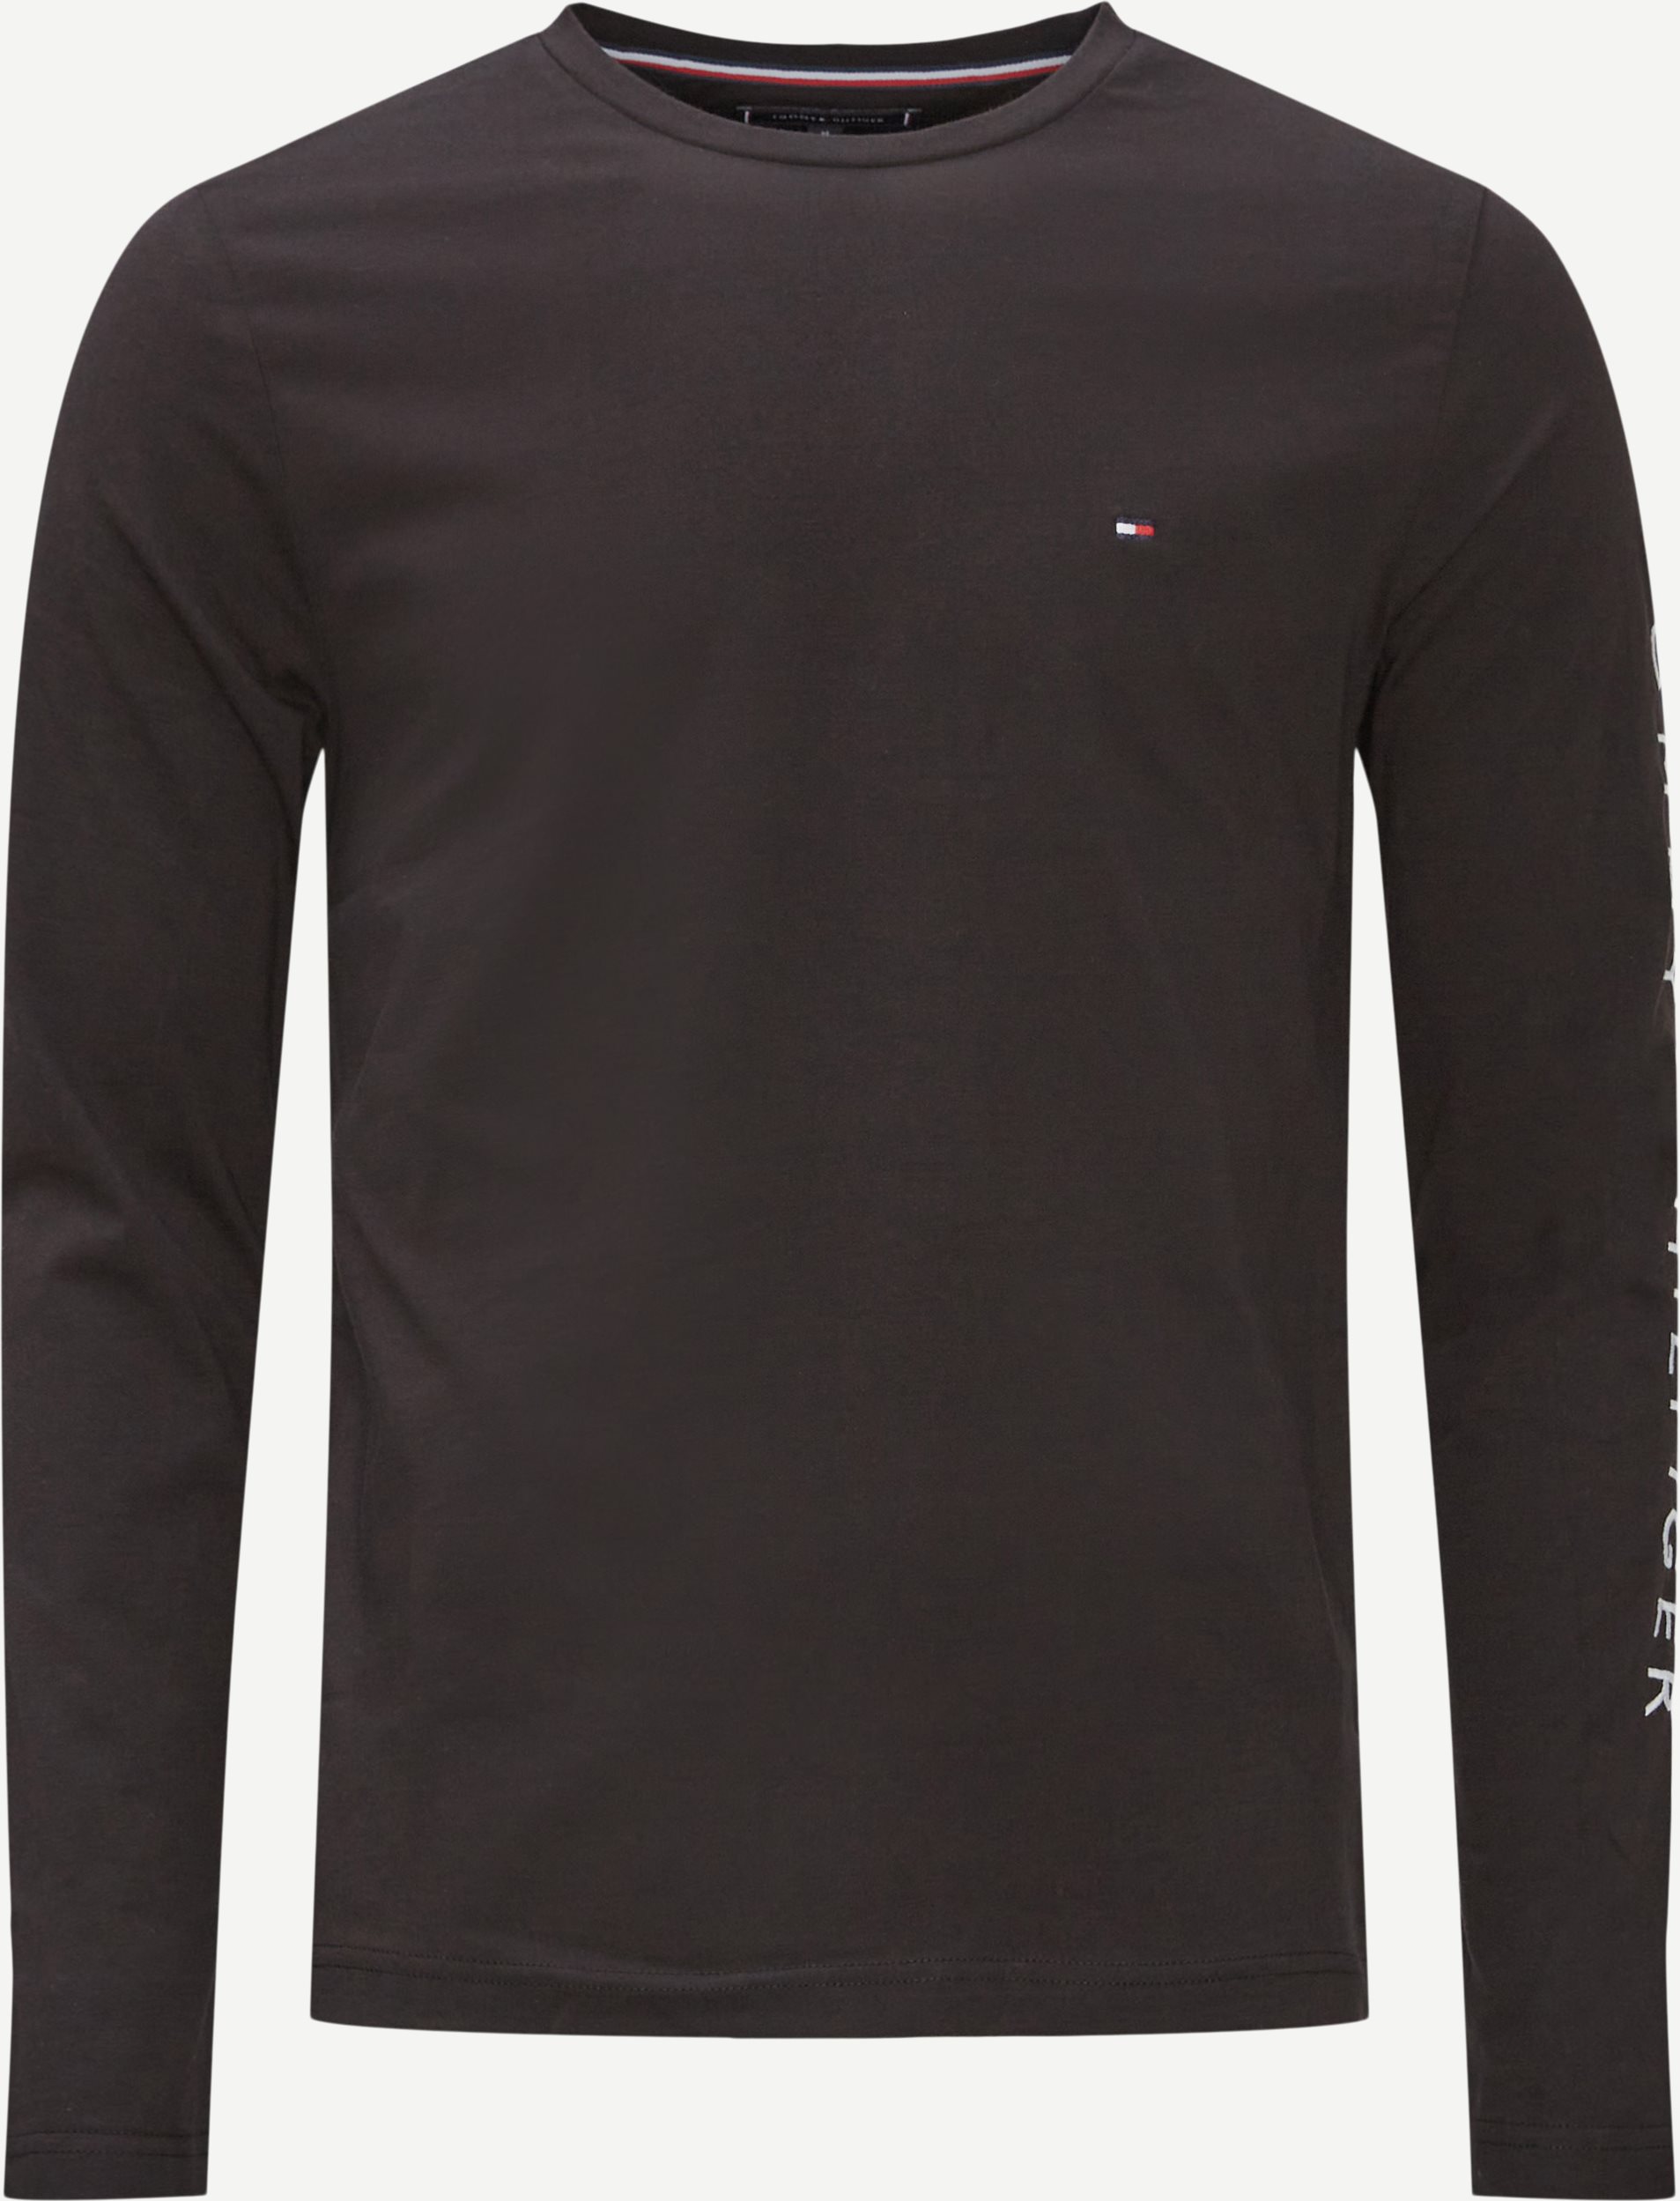 Tommy logo long sleeve tee - T-shirts - Regular fit - Black